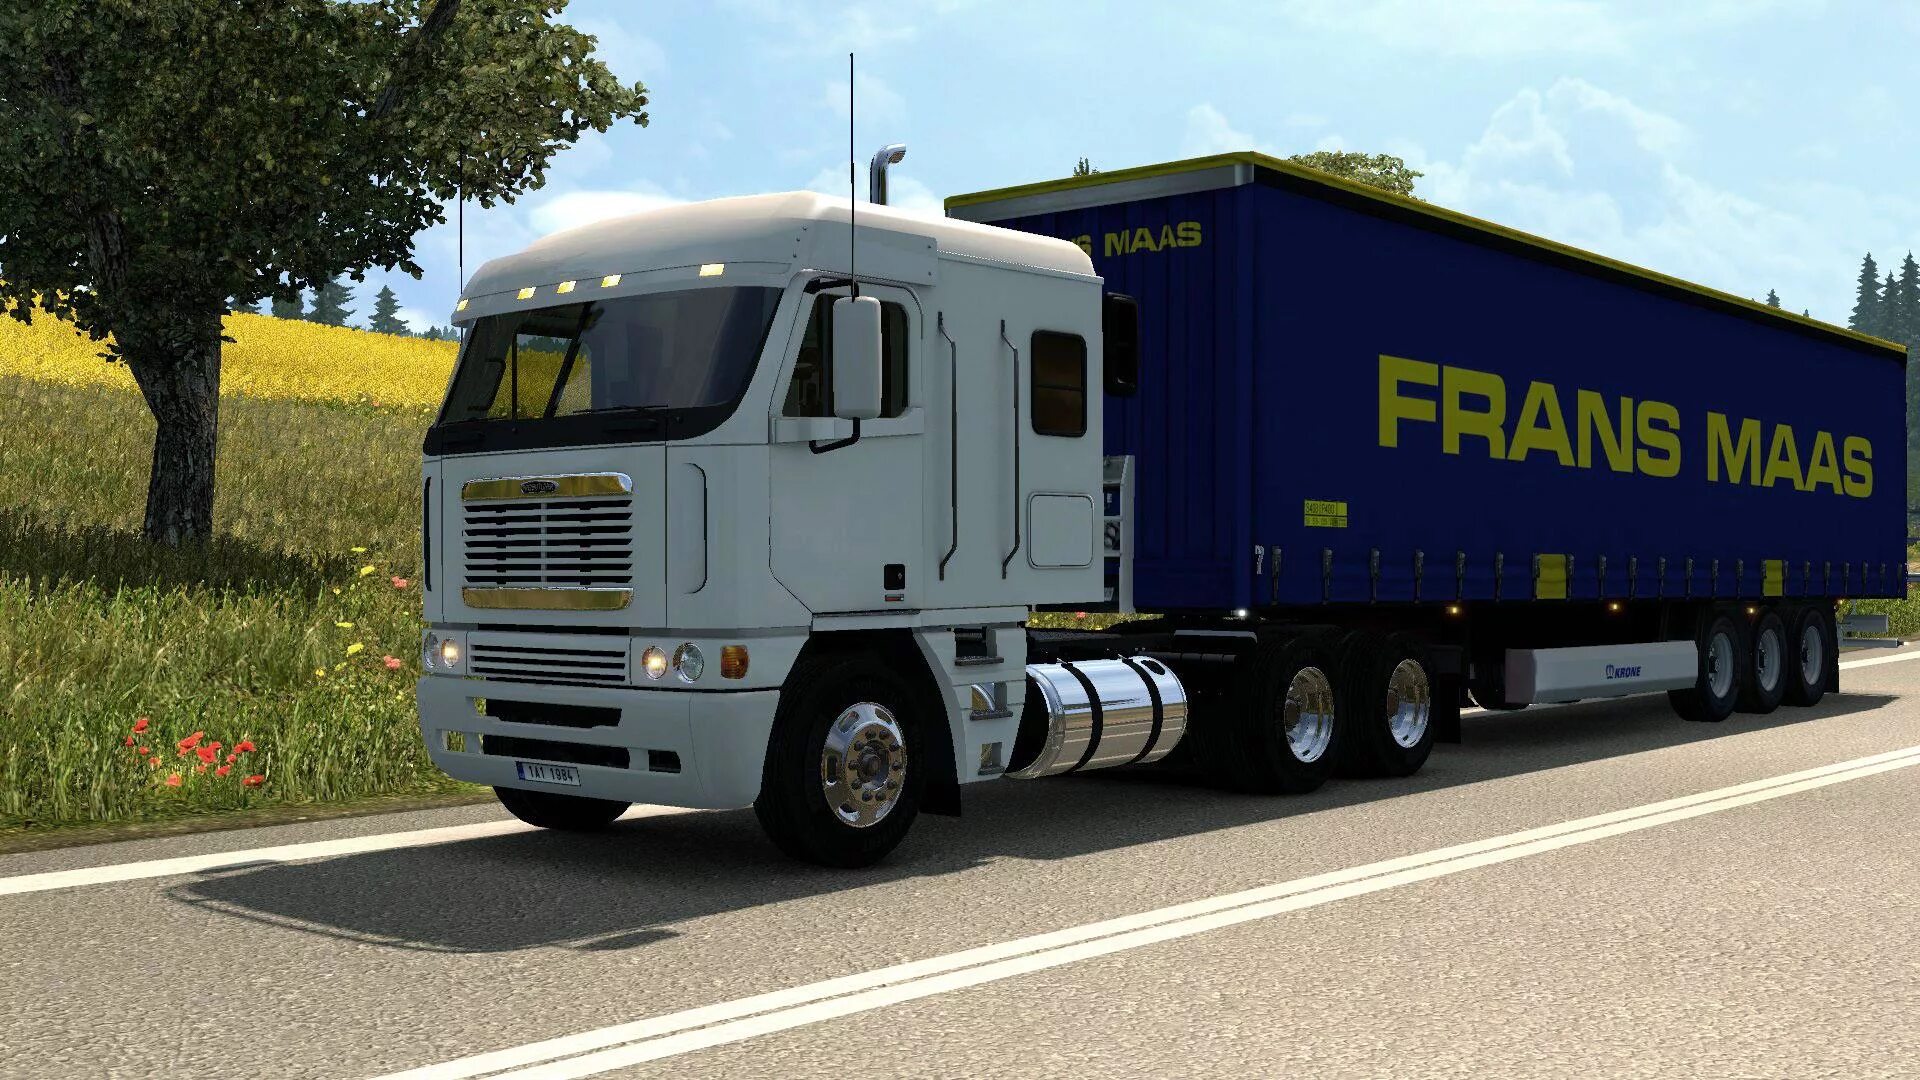 Freightliner Argosy етс. Фредлайнер Аргоси етс 2. Euro Truck Simulator 2 freightliner Argosy. Мод freightliner Argosy. Euro truck simulator моды грузовиков